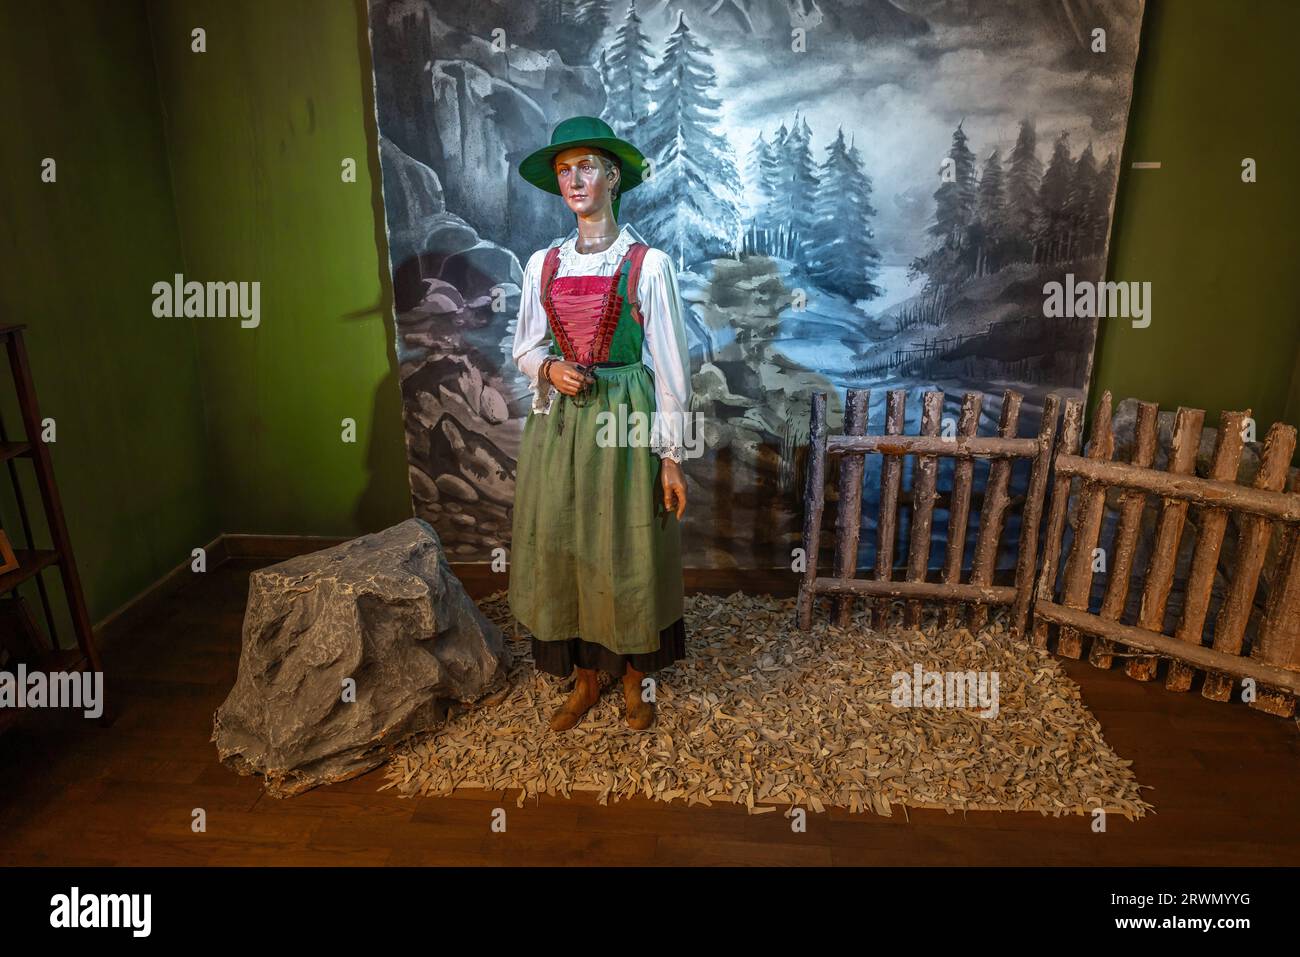 Traditional Tyrolean Clothing at Tyrolean Folk Art Museum - Innsbruck, Austria Stock Photo